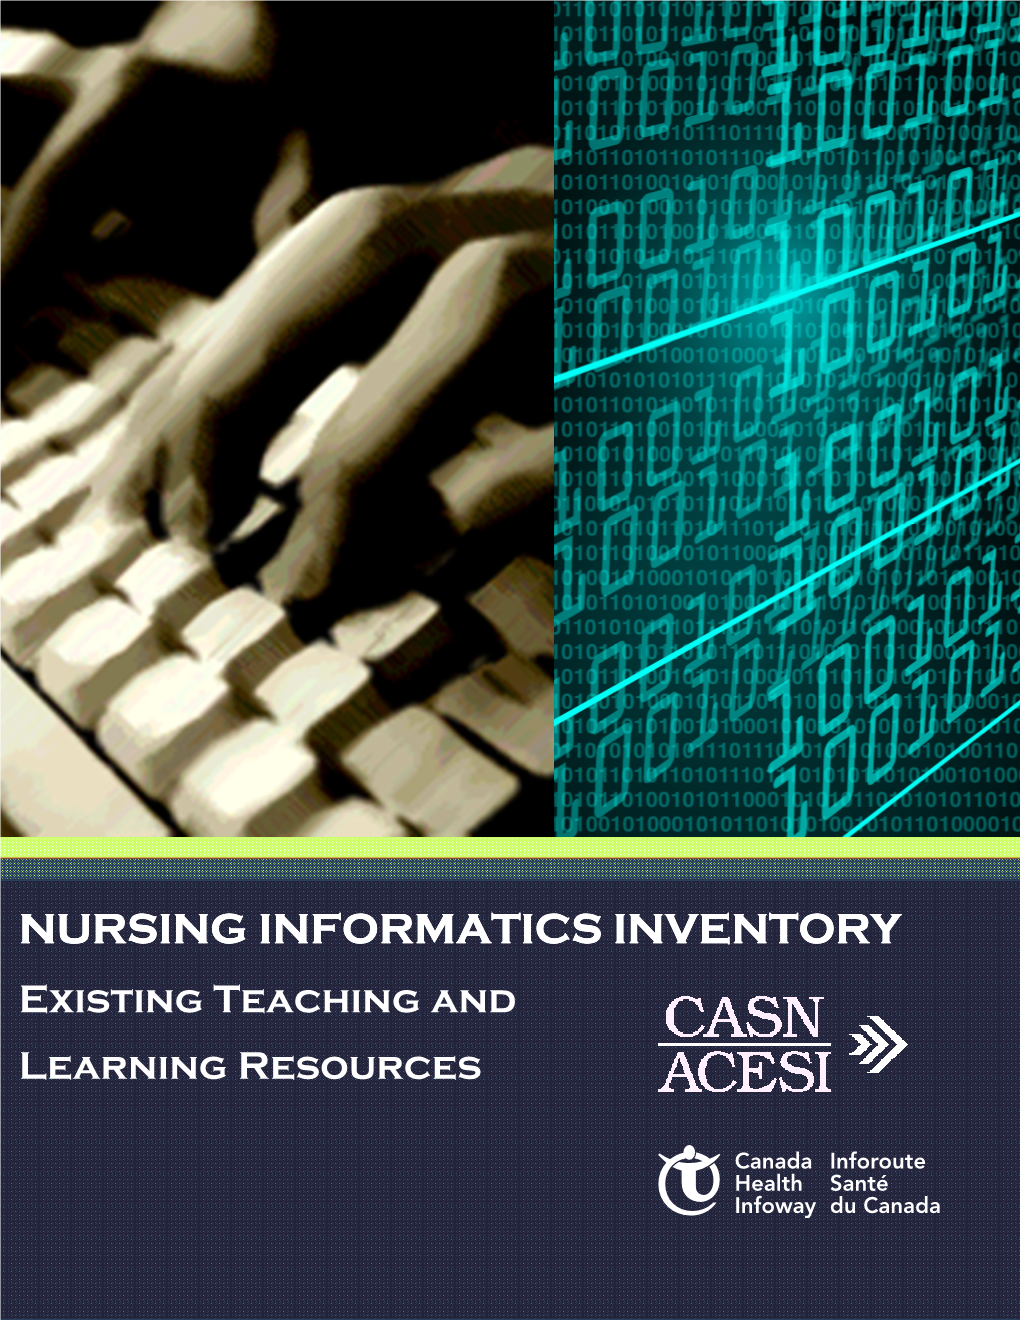 CASN Nursing Informatics Inventory